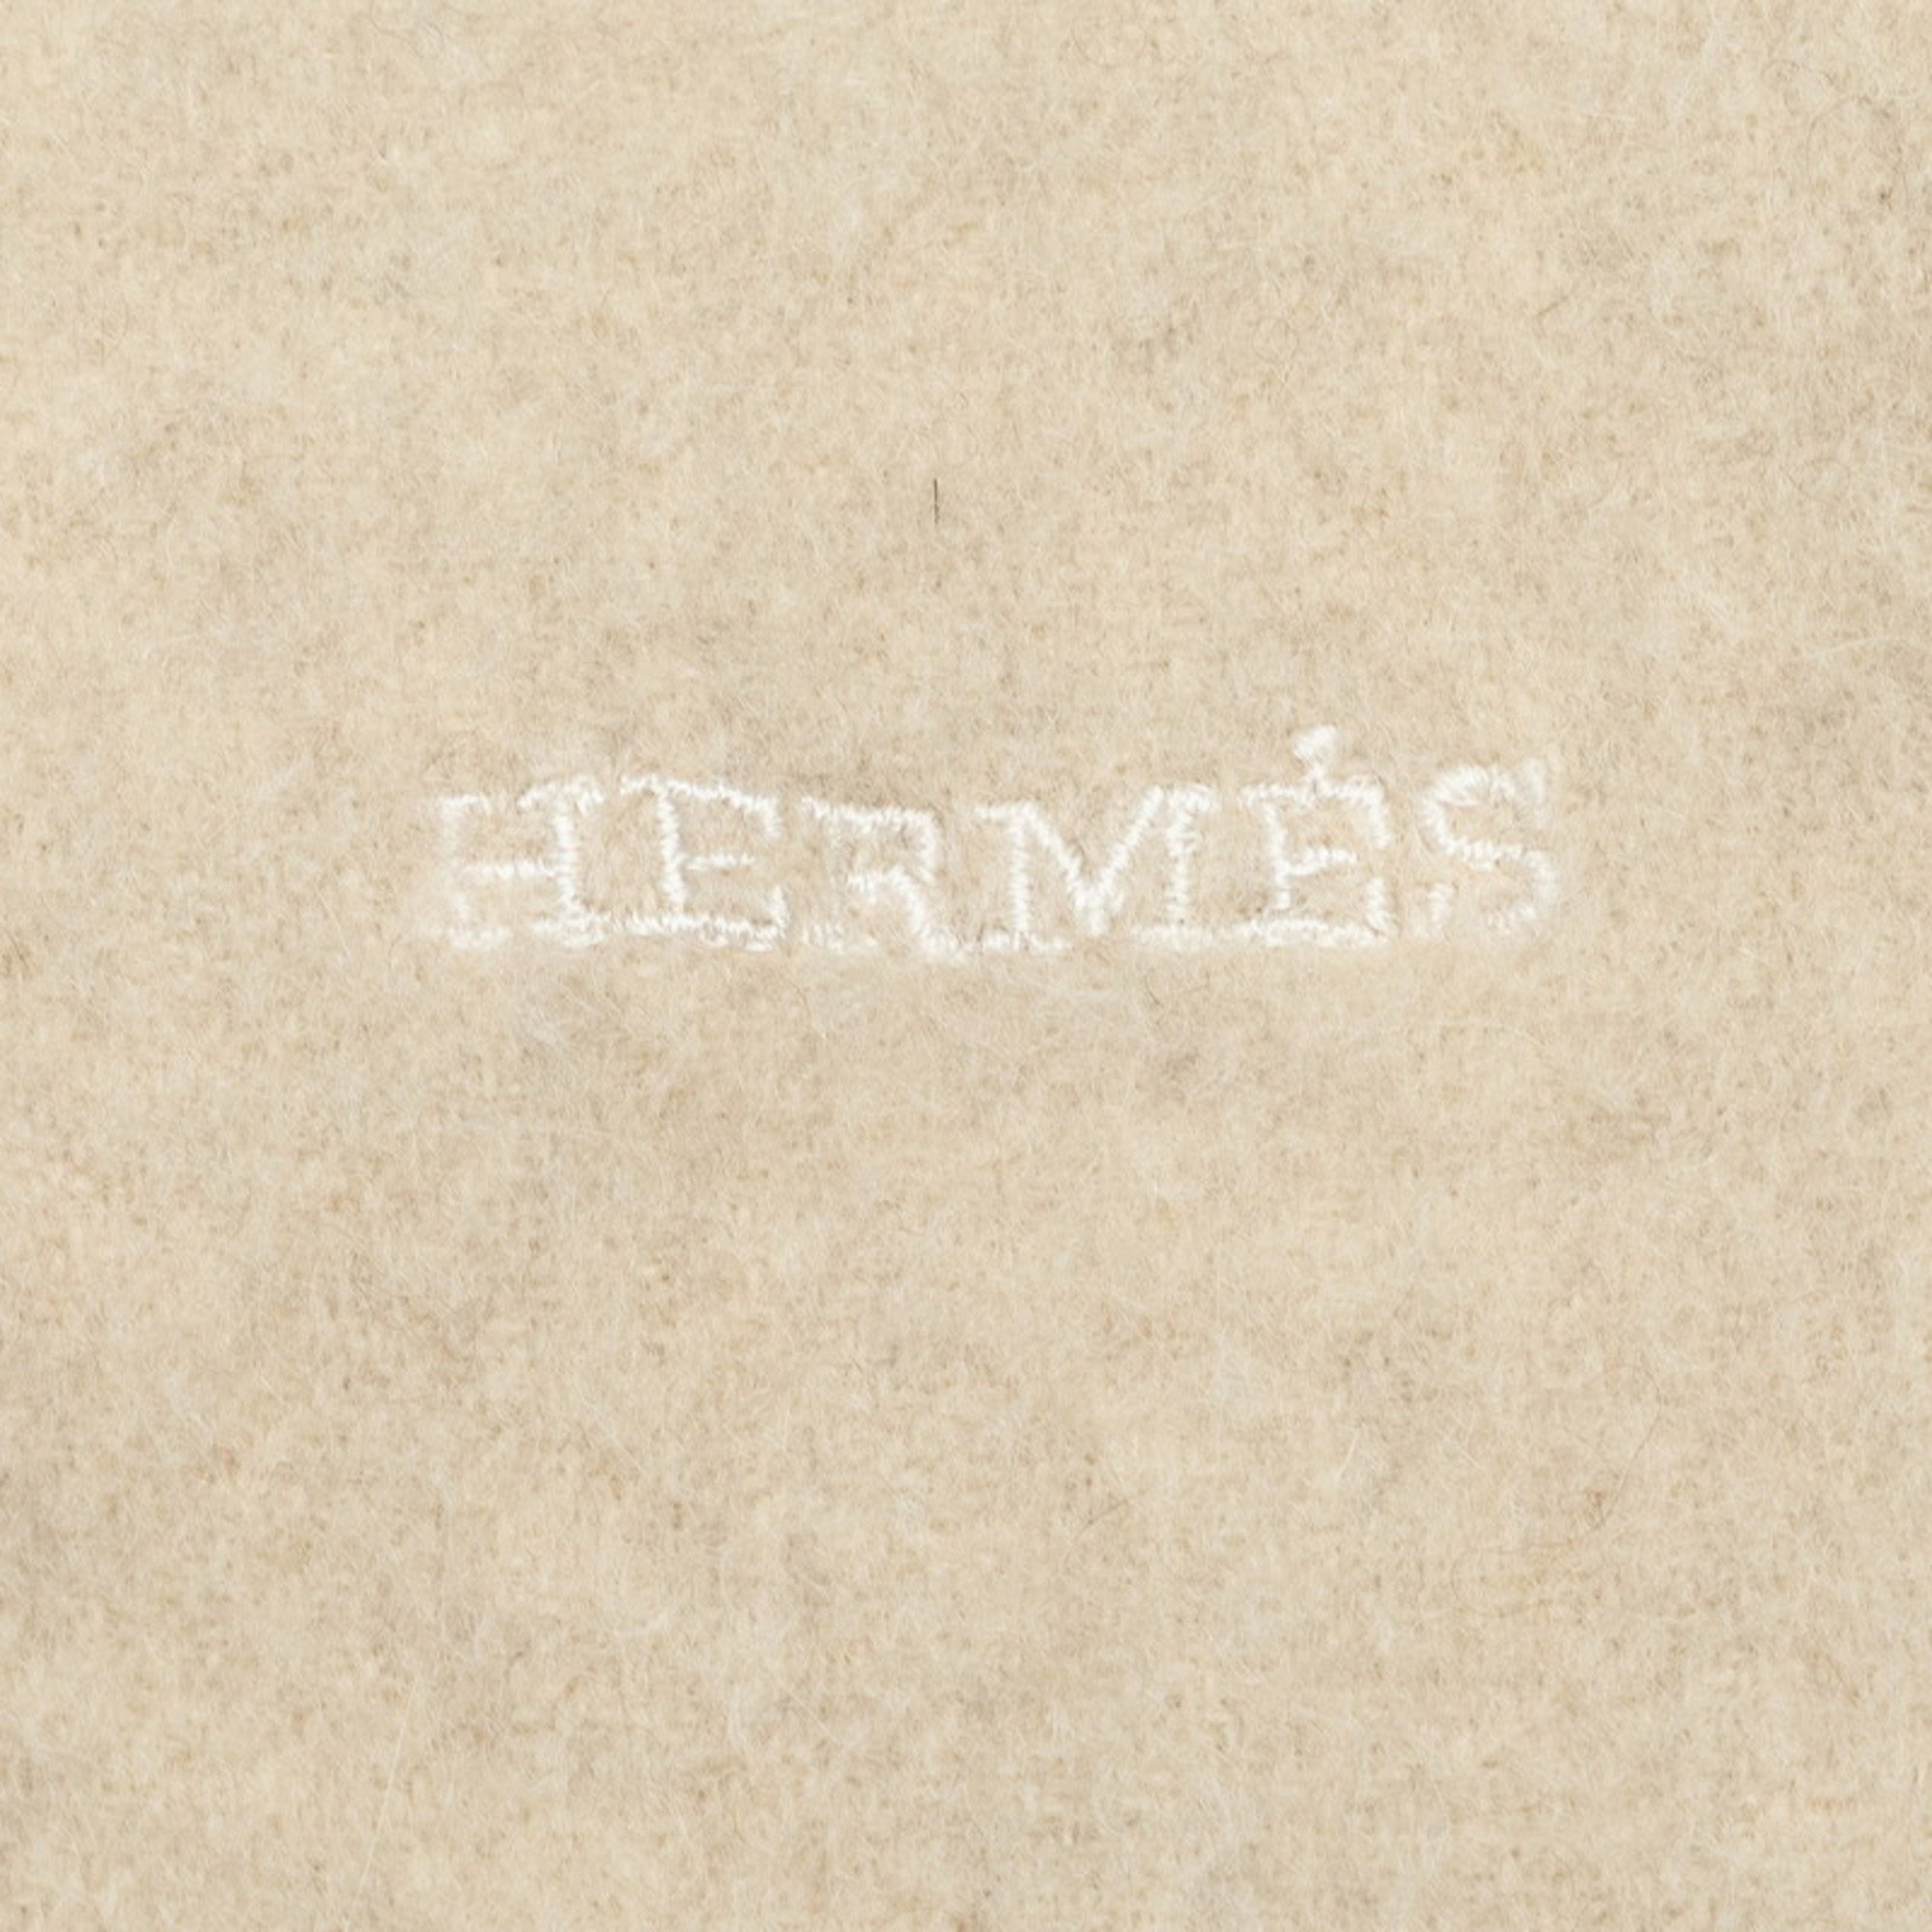 Hermes Large Scarf Ivory Beige Cashmere Women's HERMES